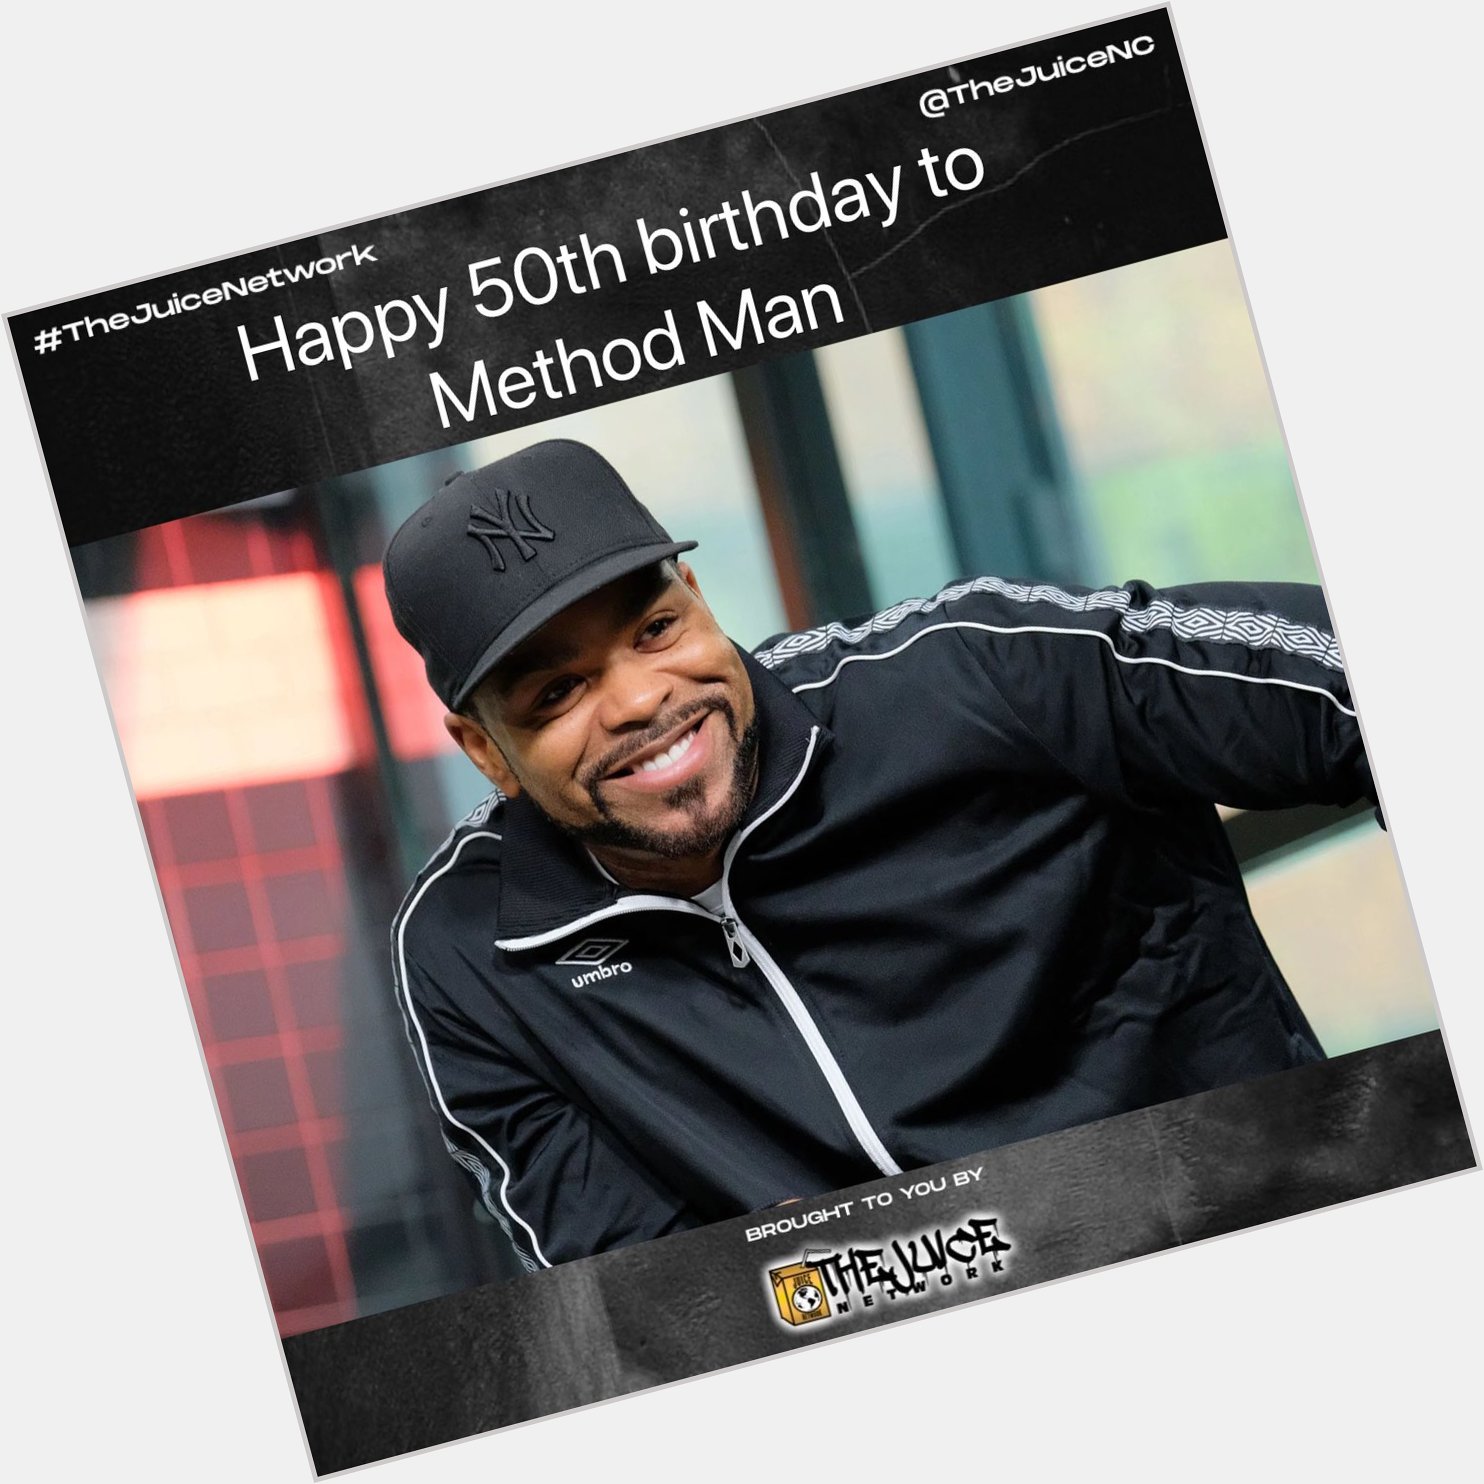 Happy 50th birthday to Method Man!    